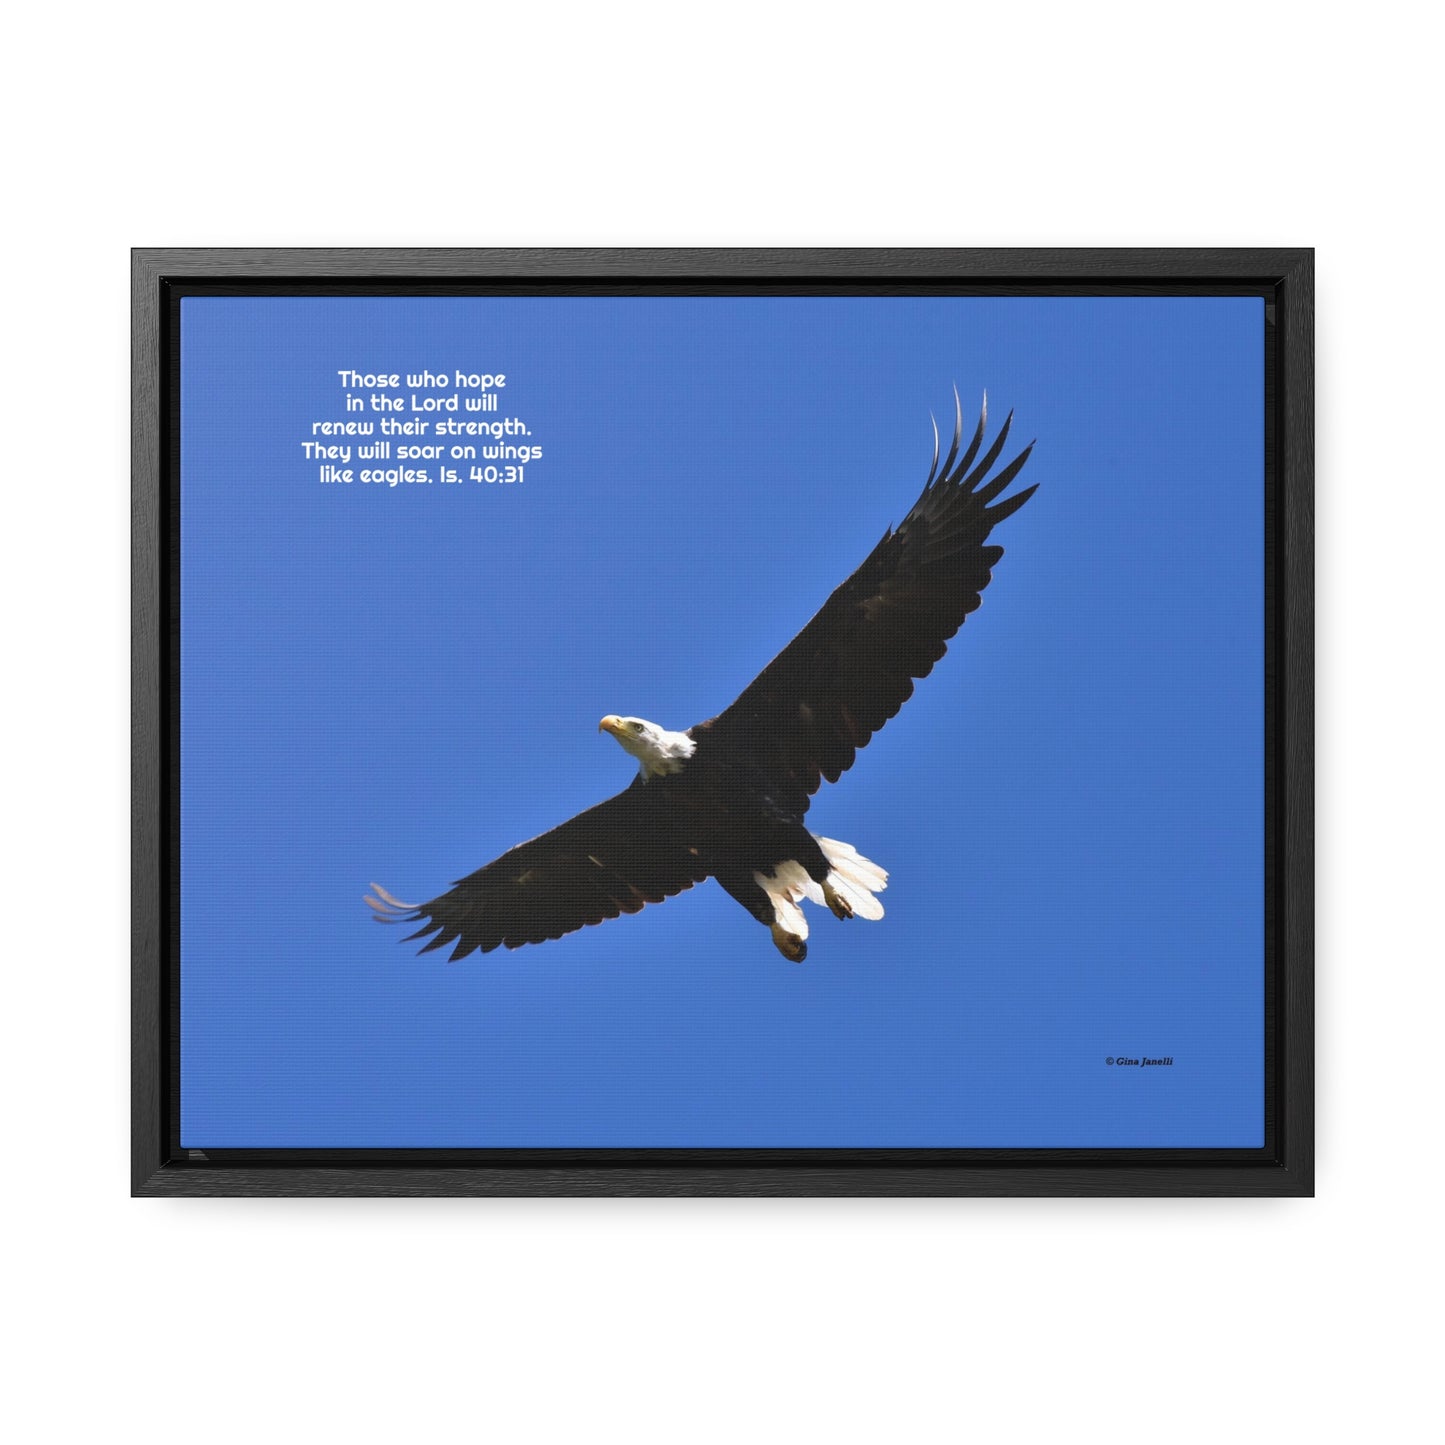 Soar as Eagles  Isaiah 40:31 - Bald Eagle       Gallery Canvas Wraps, Horizontal Frame